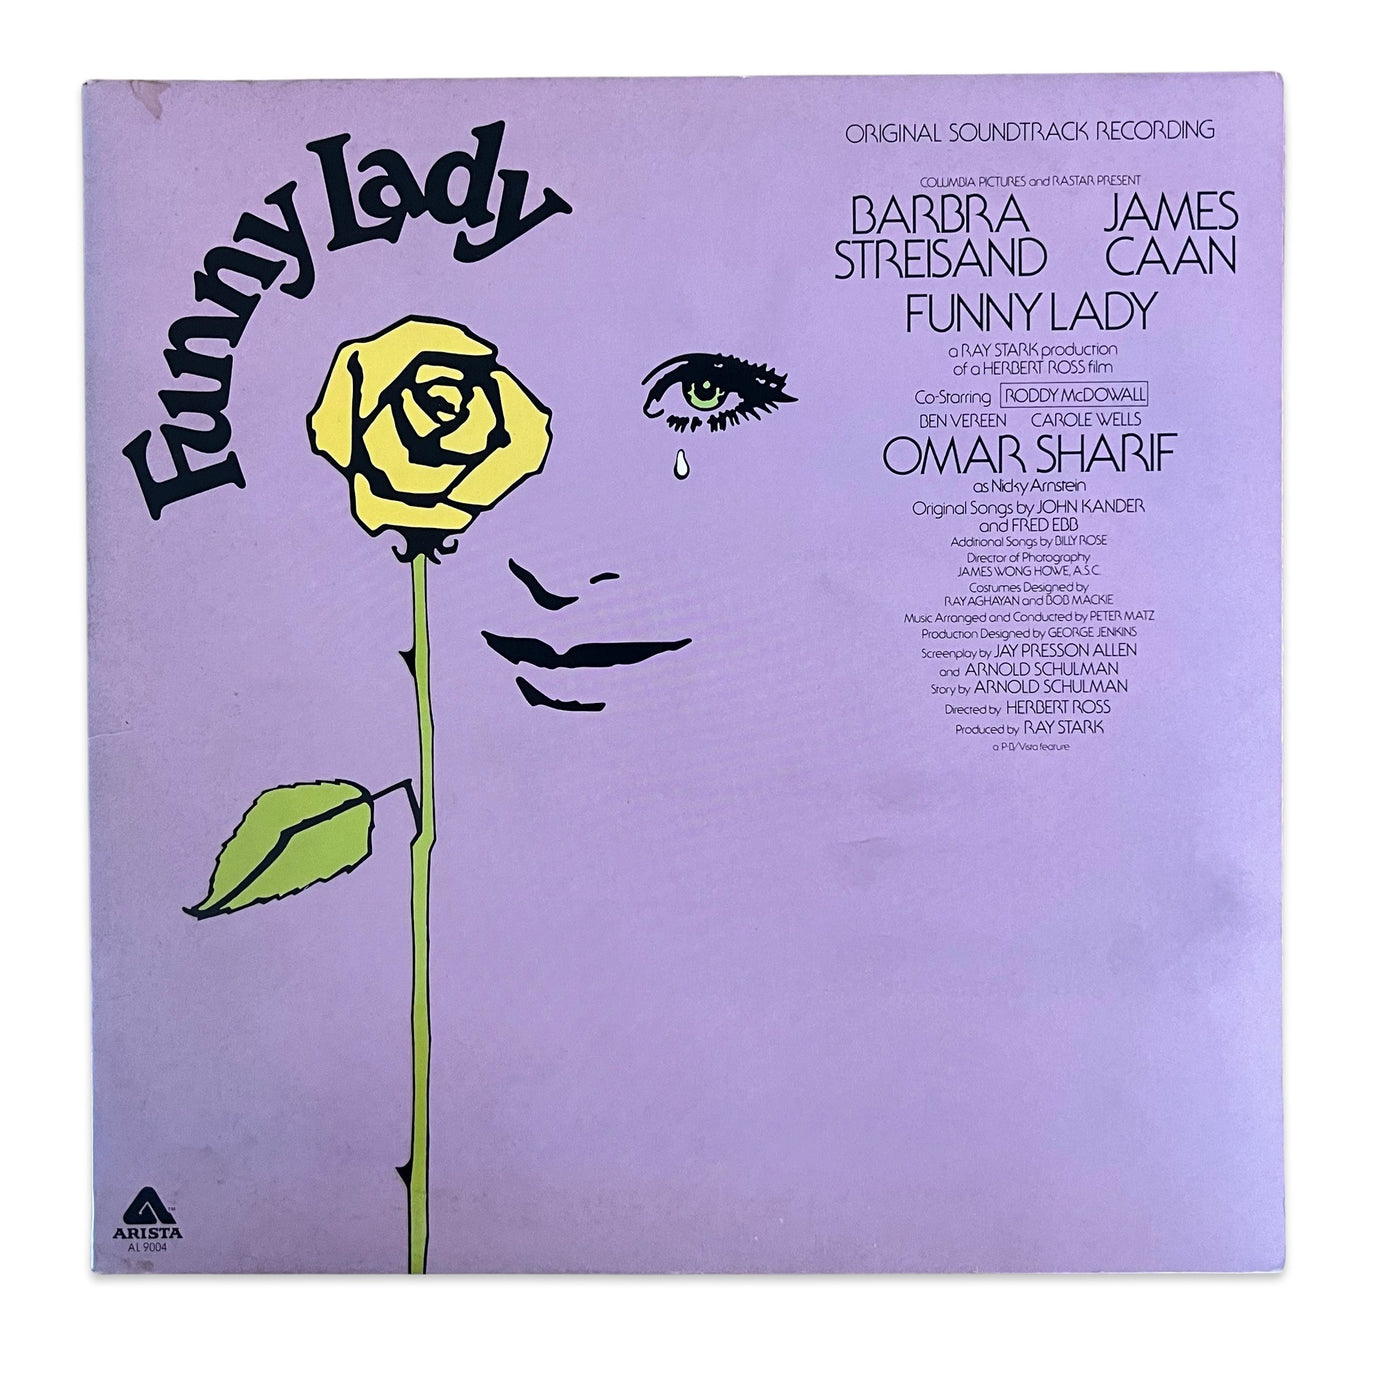 Barbra Streisand, James Caan – Funny Lady (Original Soundtrack Recording)